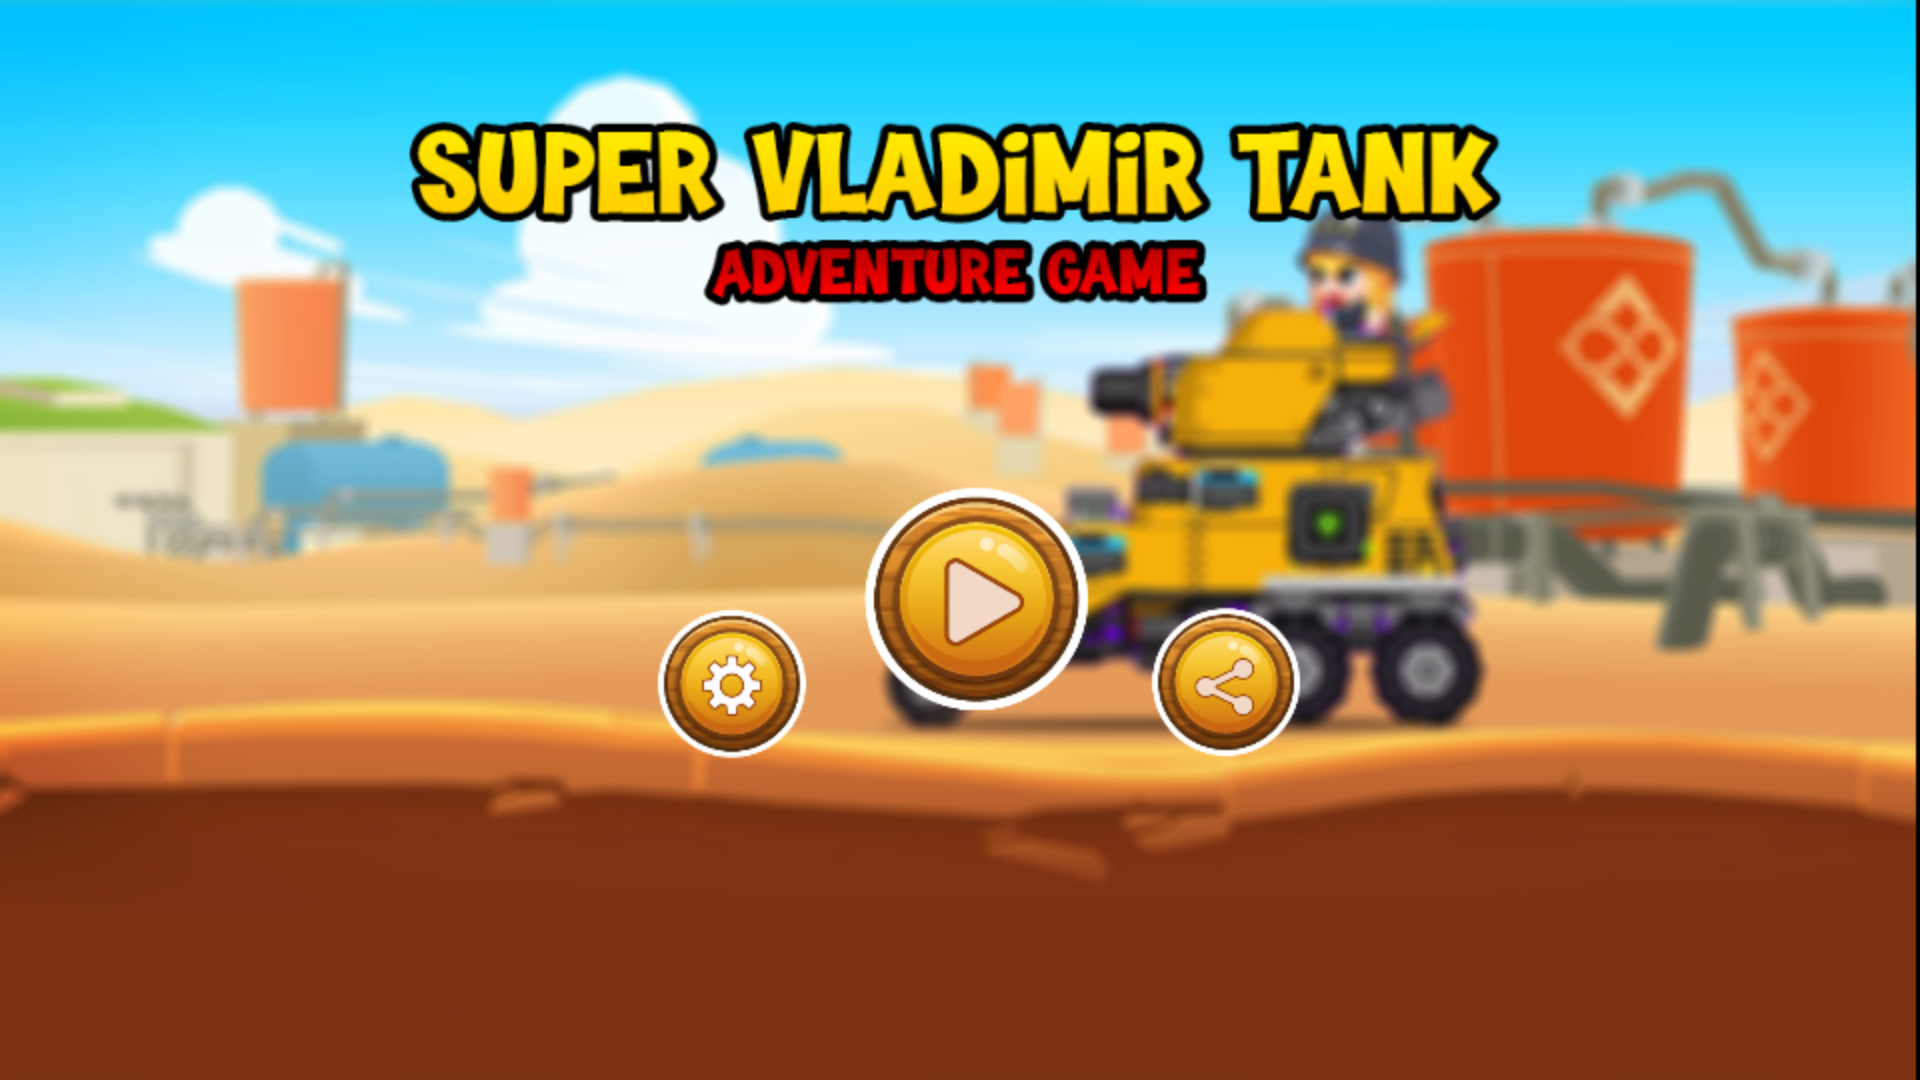 Super Tank Cartoon Rumble Game